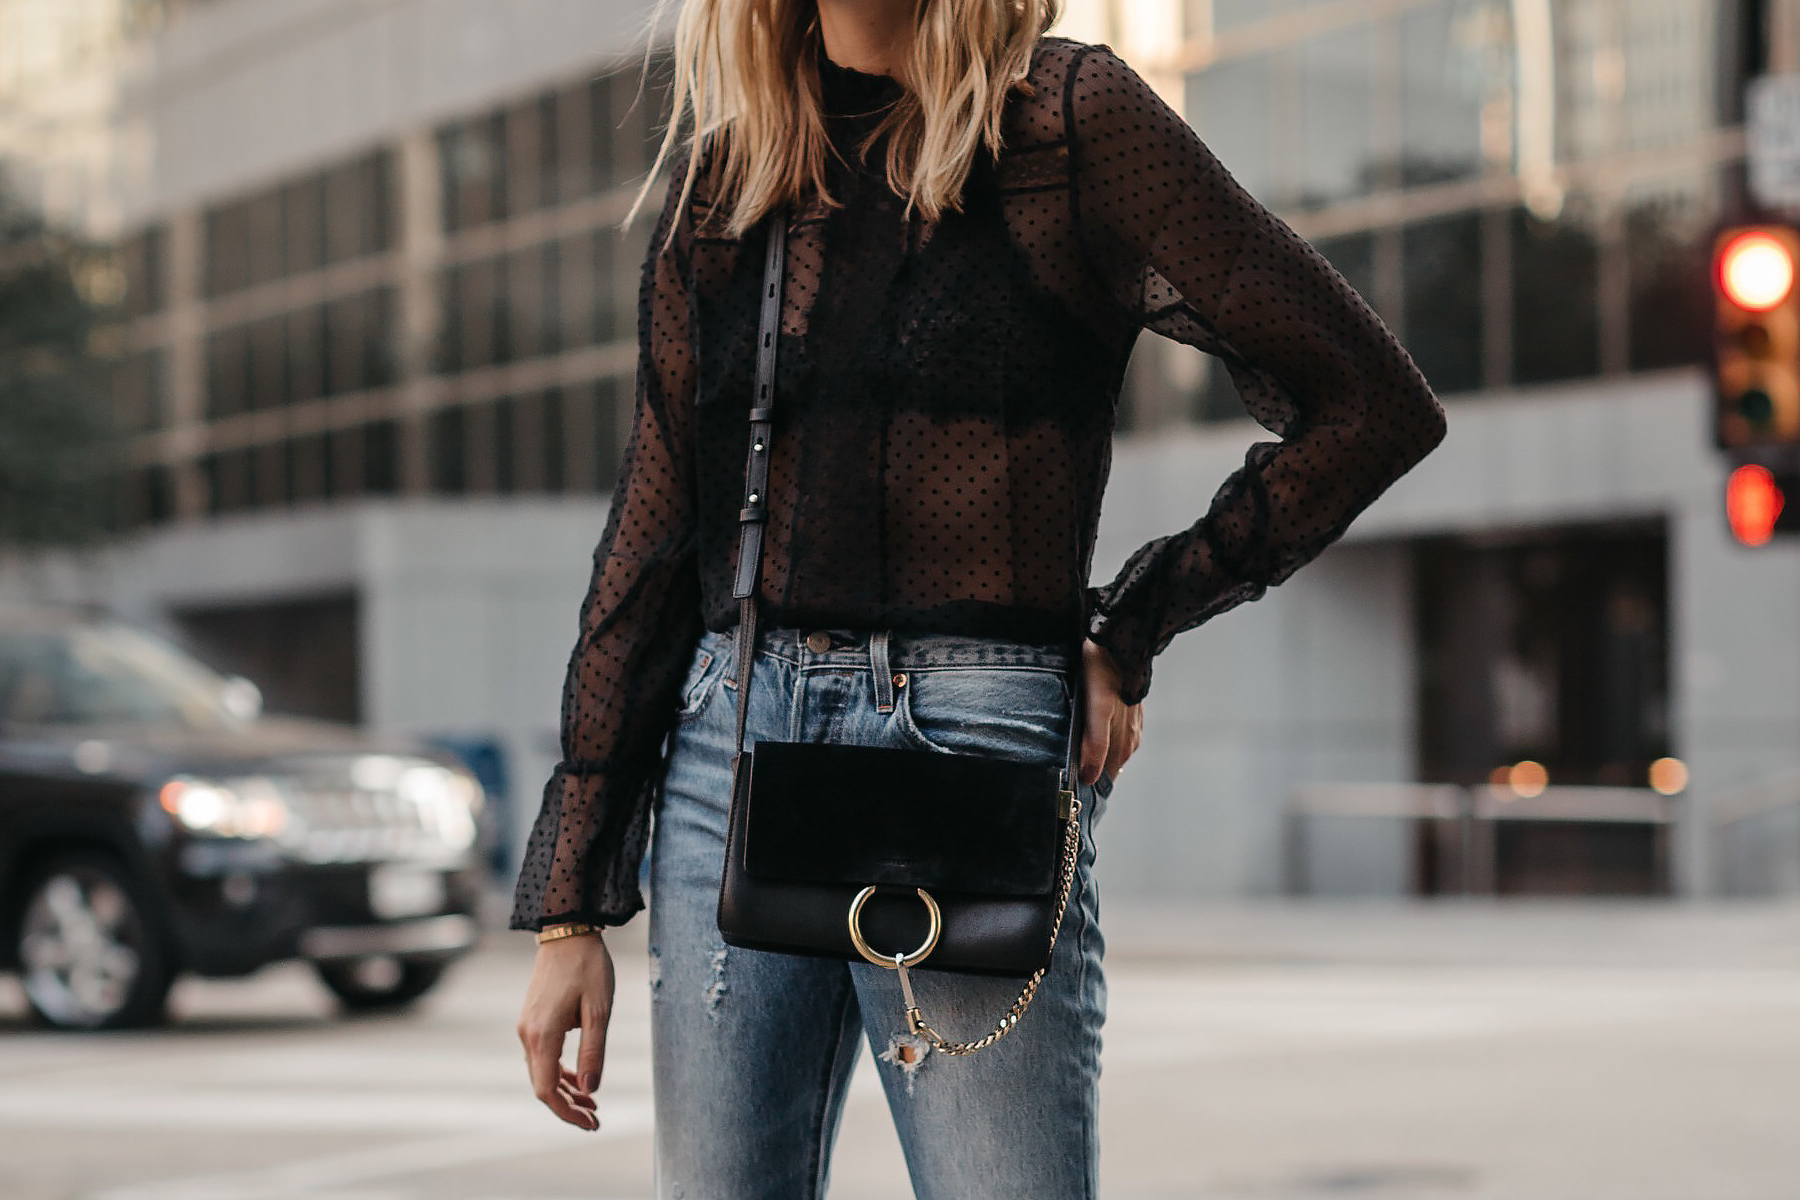 Anine Bing Black Lace Top Chloe Faye Black Handbag Denim Ripped Jeans Fashion Jackson Dallas Blogger Fashion Blogger Street Style